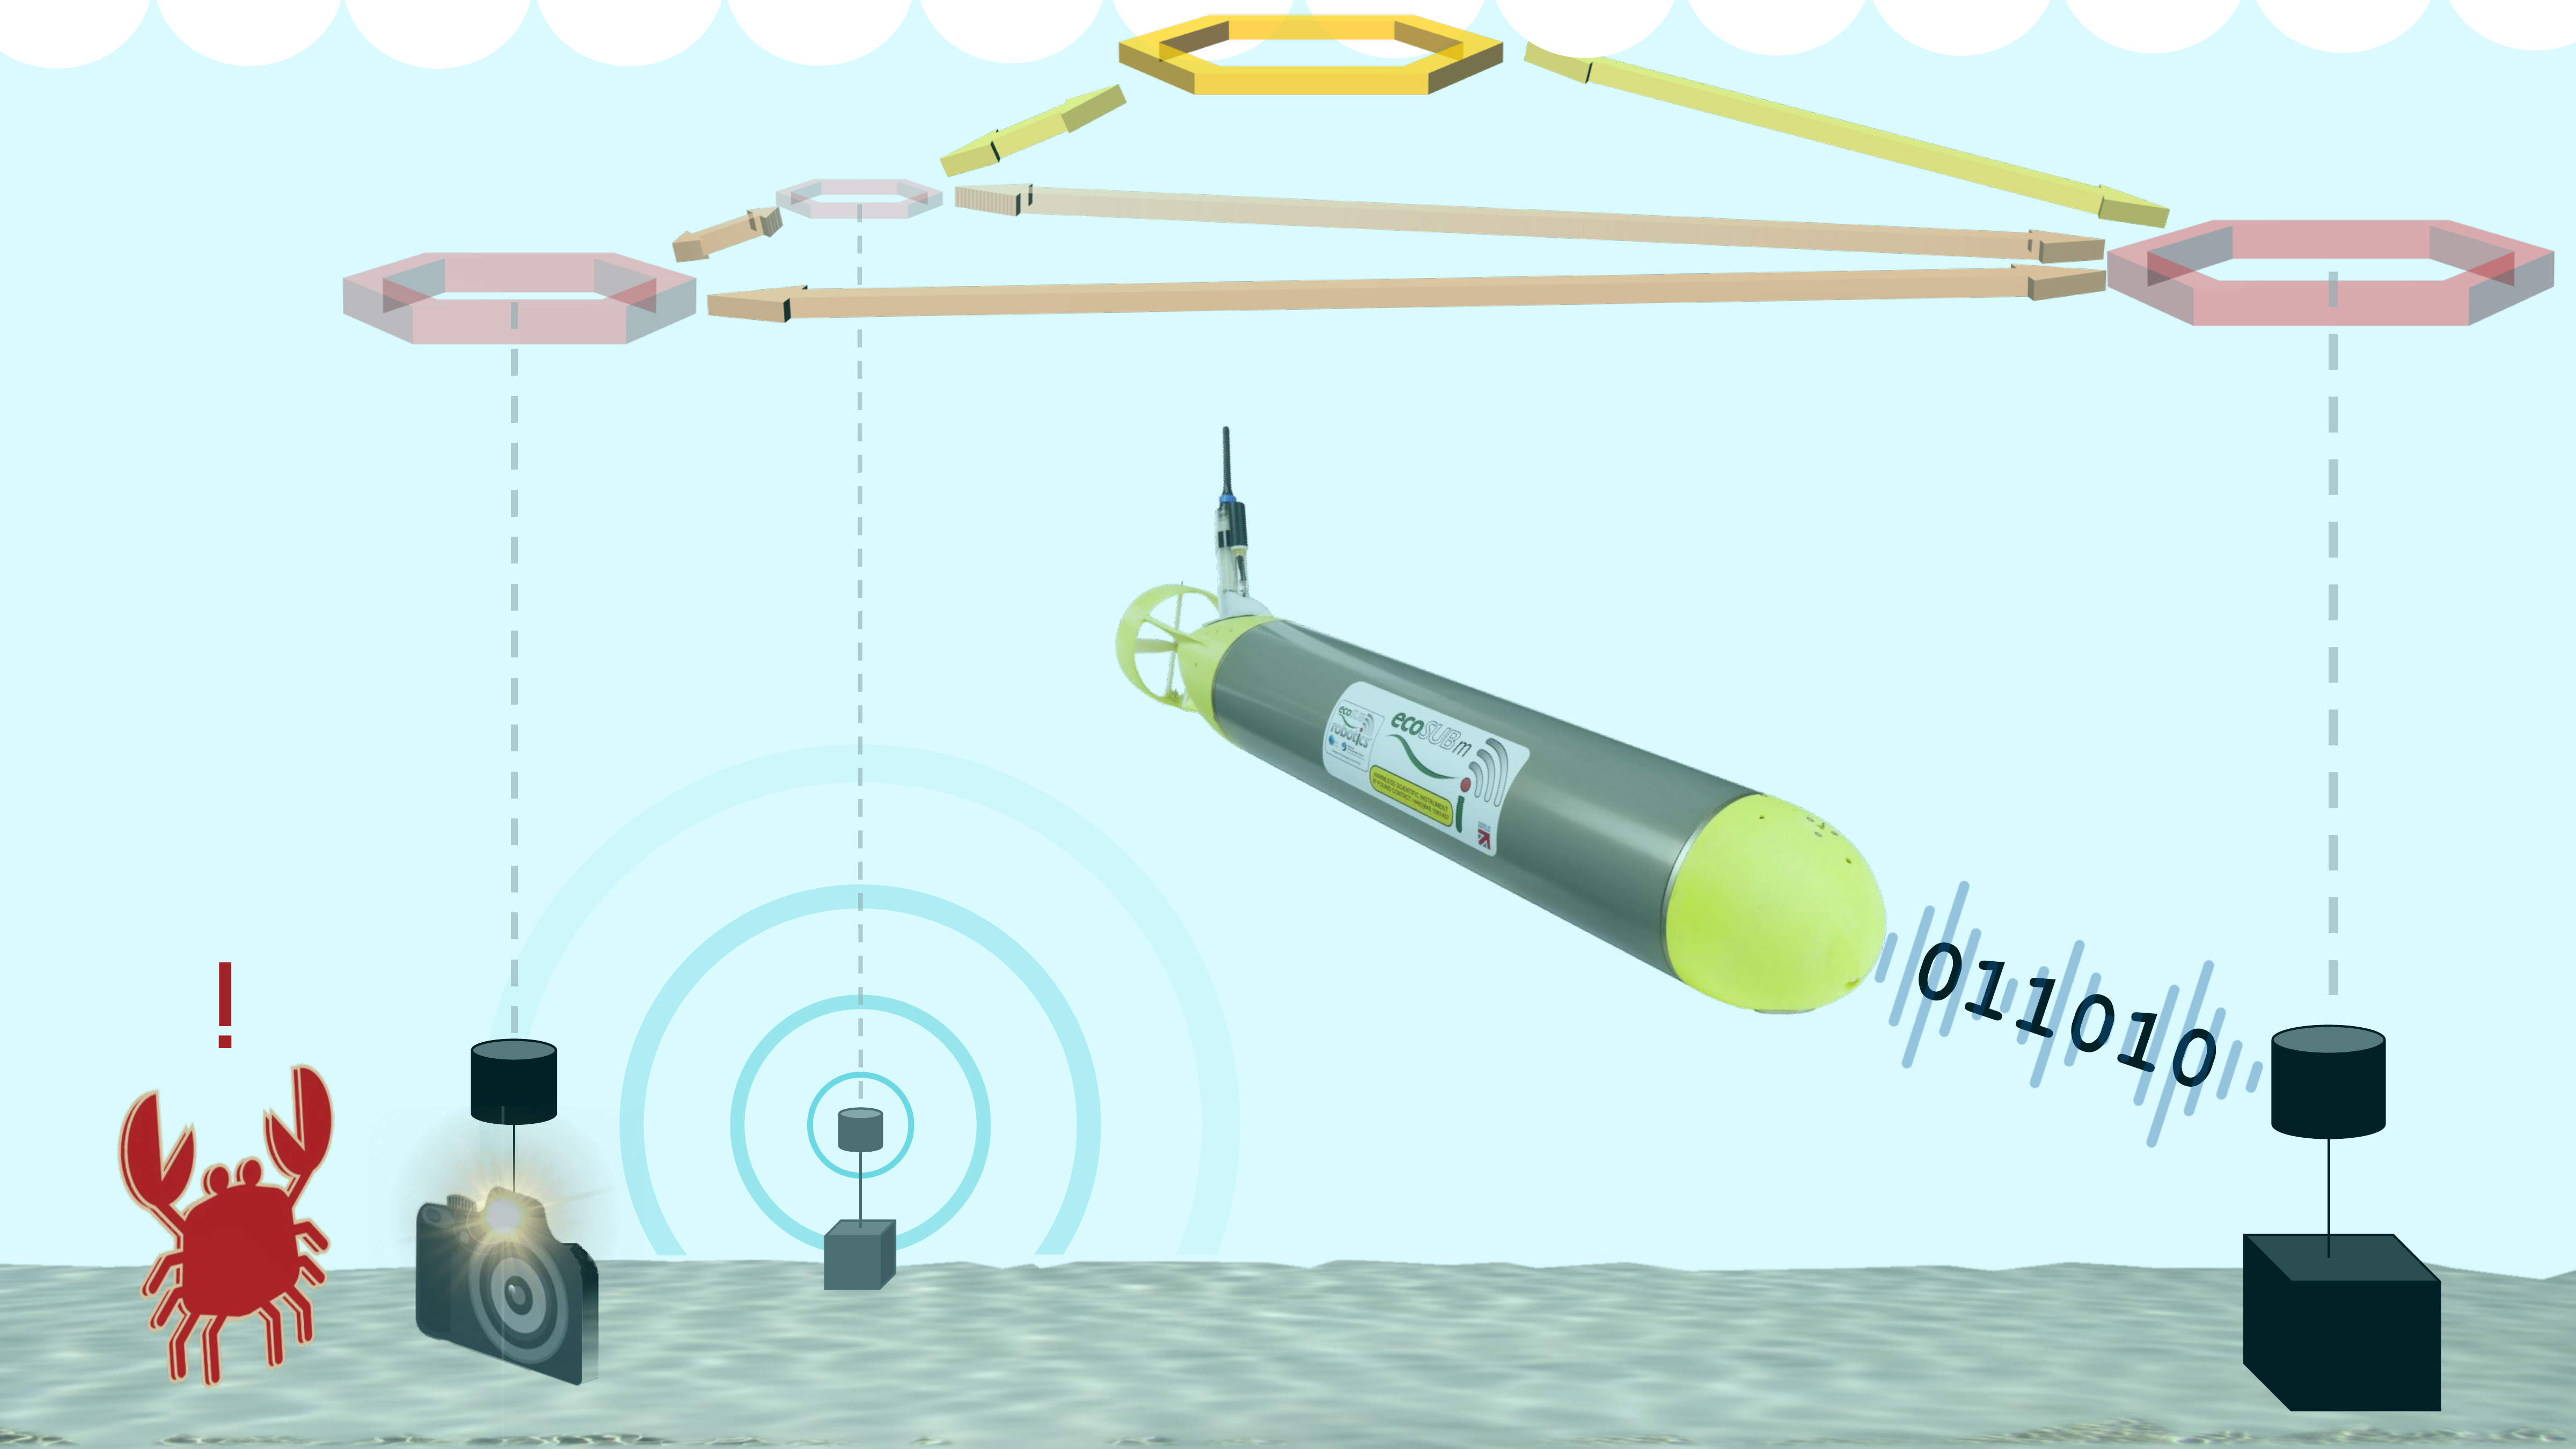 Probabilistic Planning for AUV Data Harvesting from Smart Underwater Sensor Networks